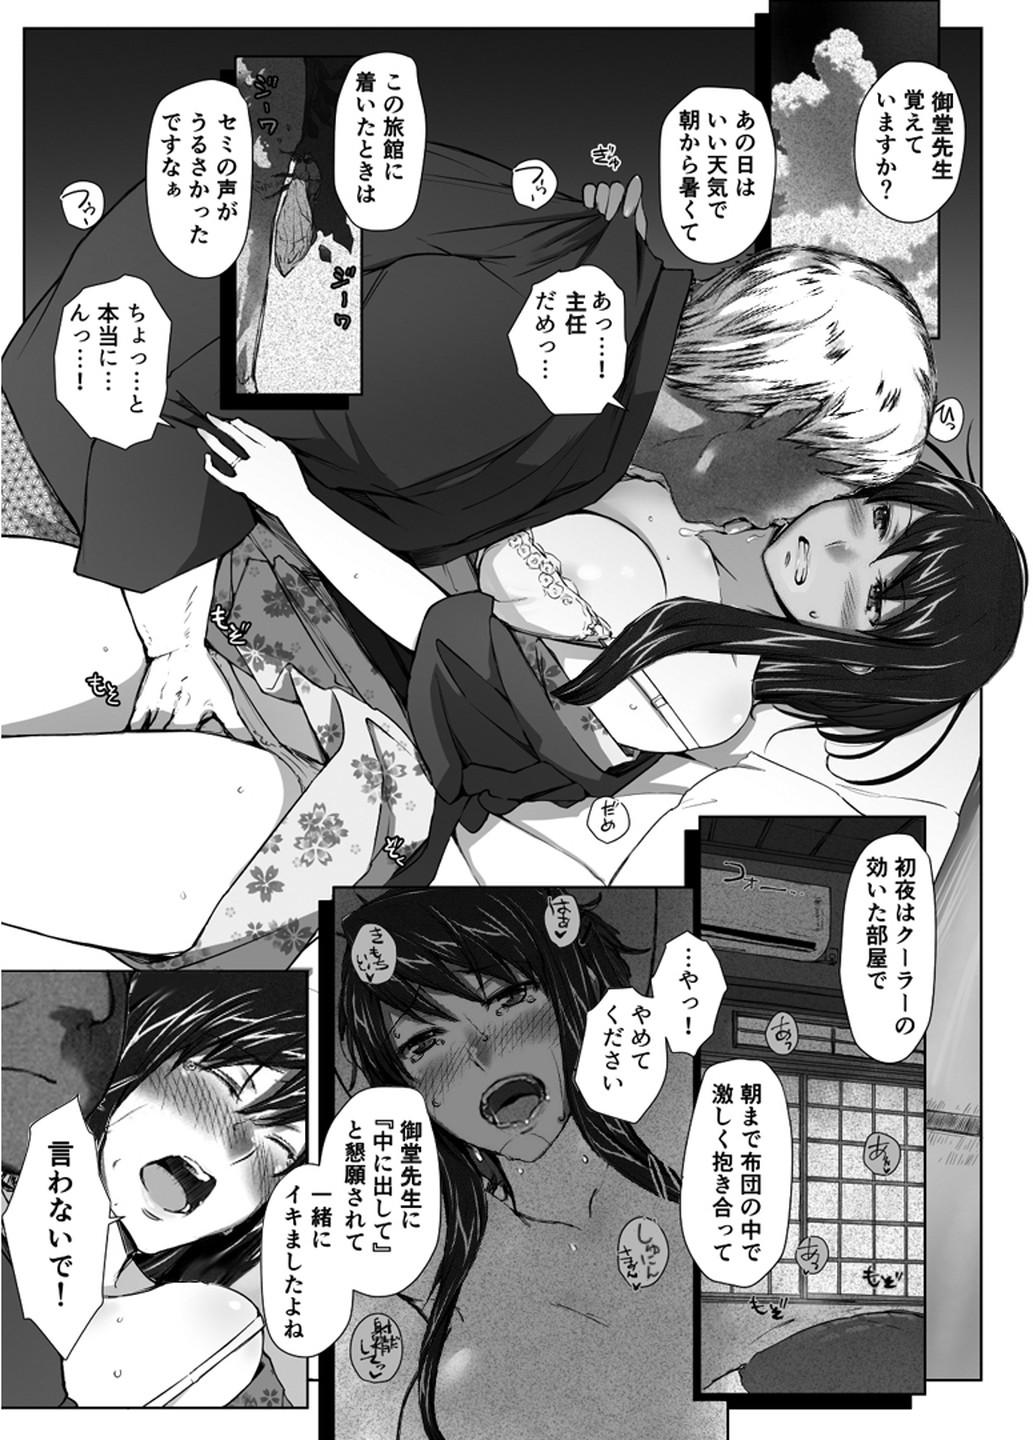 Sakiko-san in delusion Vol.1 Ver.1.1 ~Sakiko-san's circumstance at an educational training~ Stupid Sakiko (collage) on-going 43